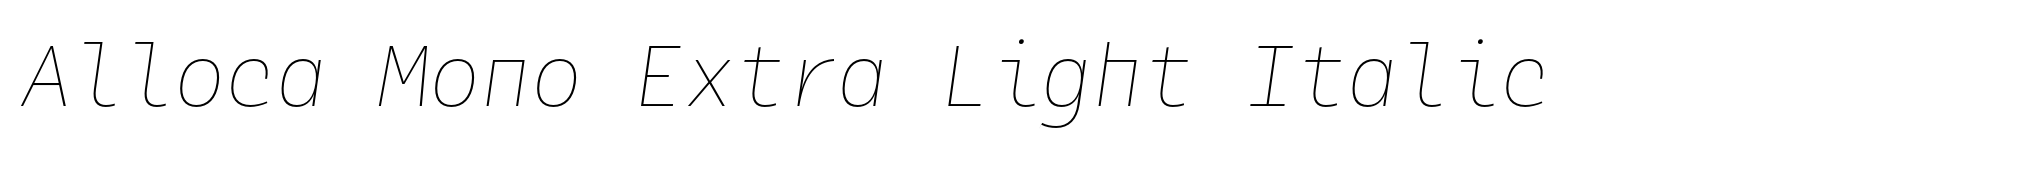 Alloca Mono Extra Light Italic image